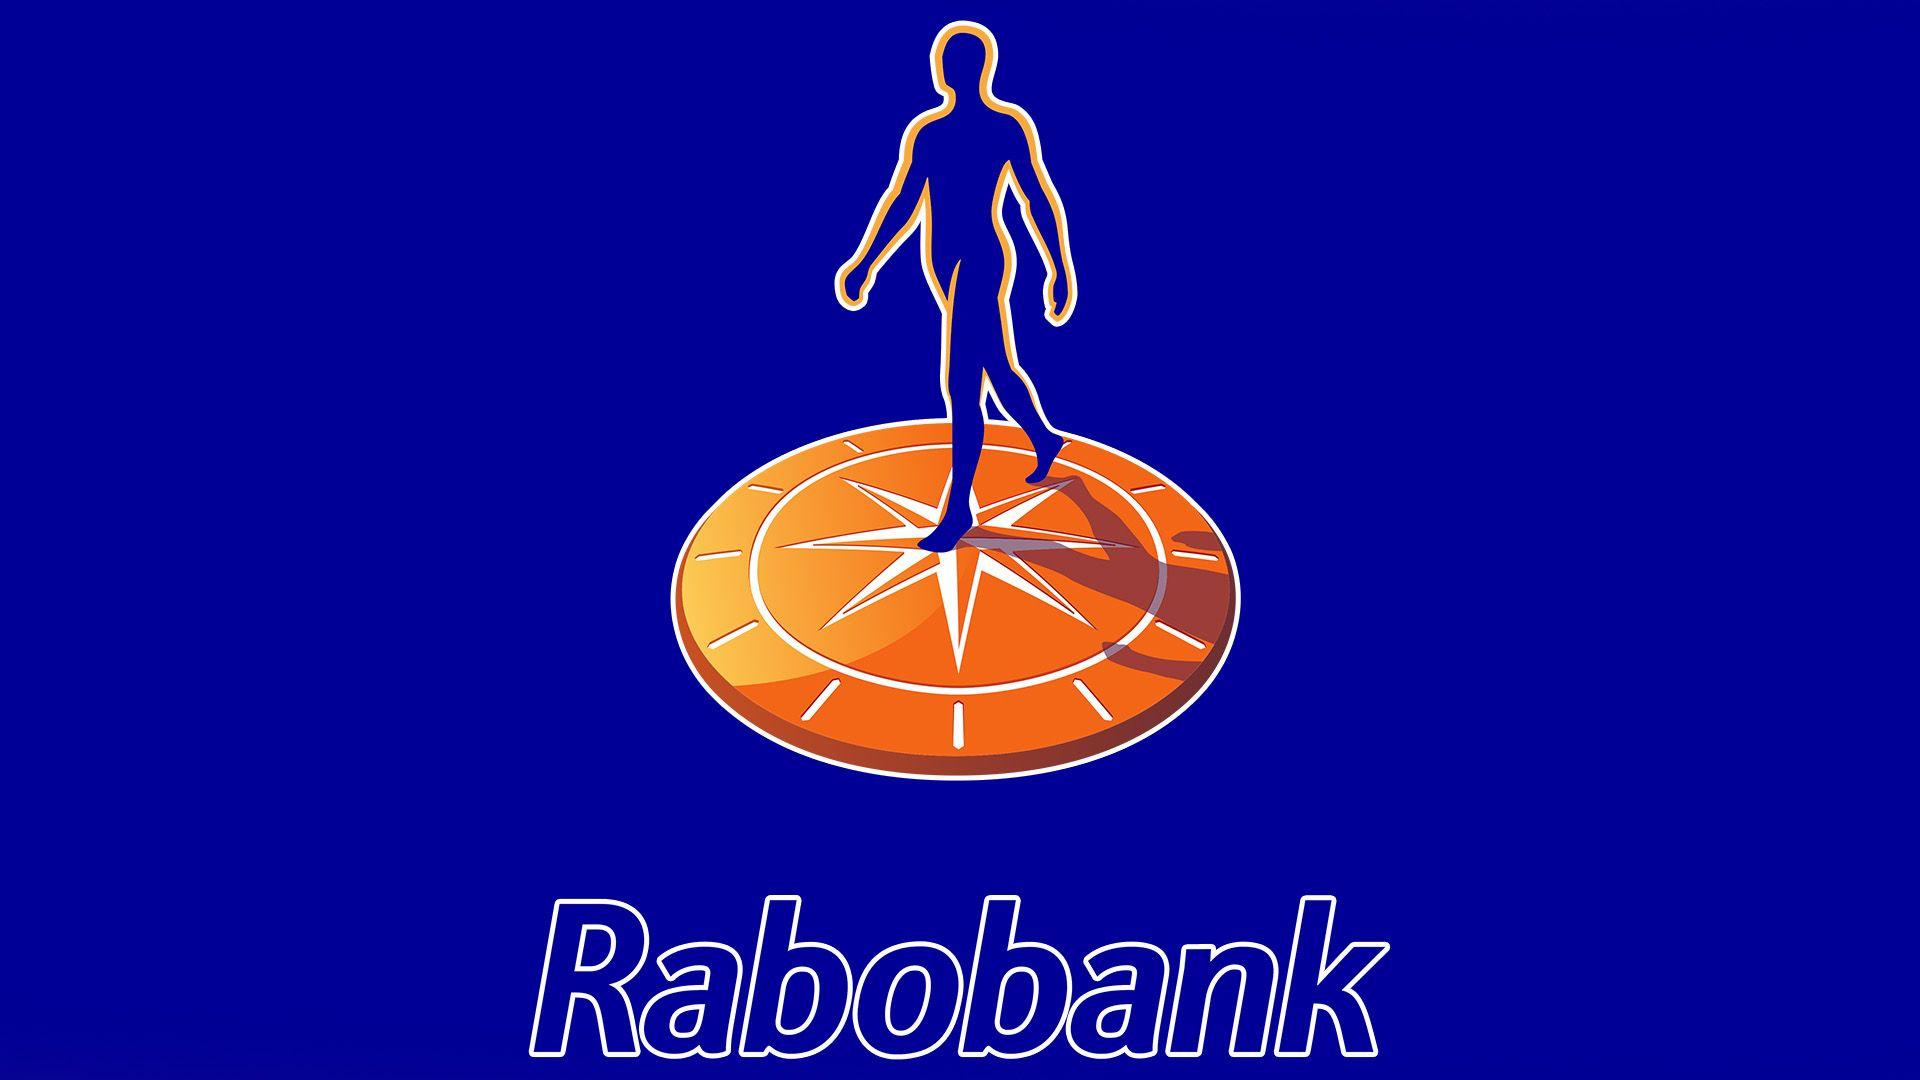 Rabobank Logo - Meaning Rabobank logo and symbol | history and evolution